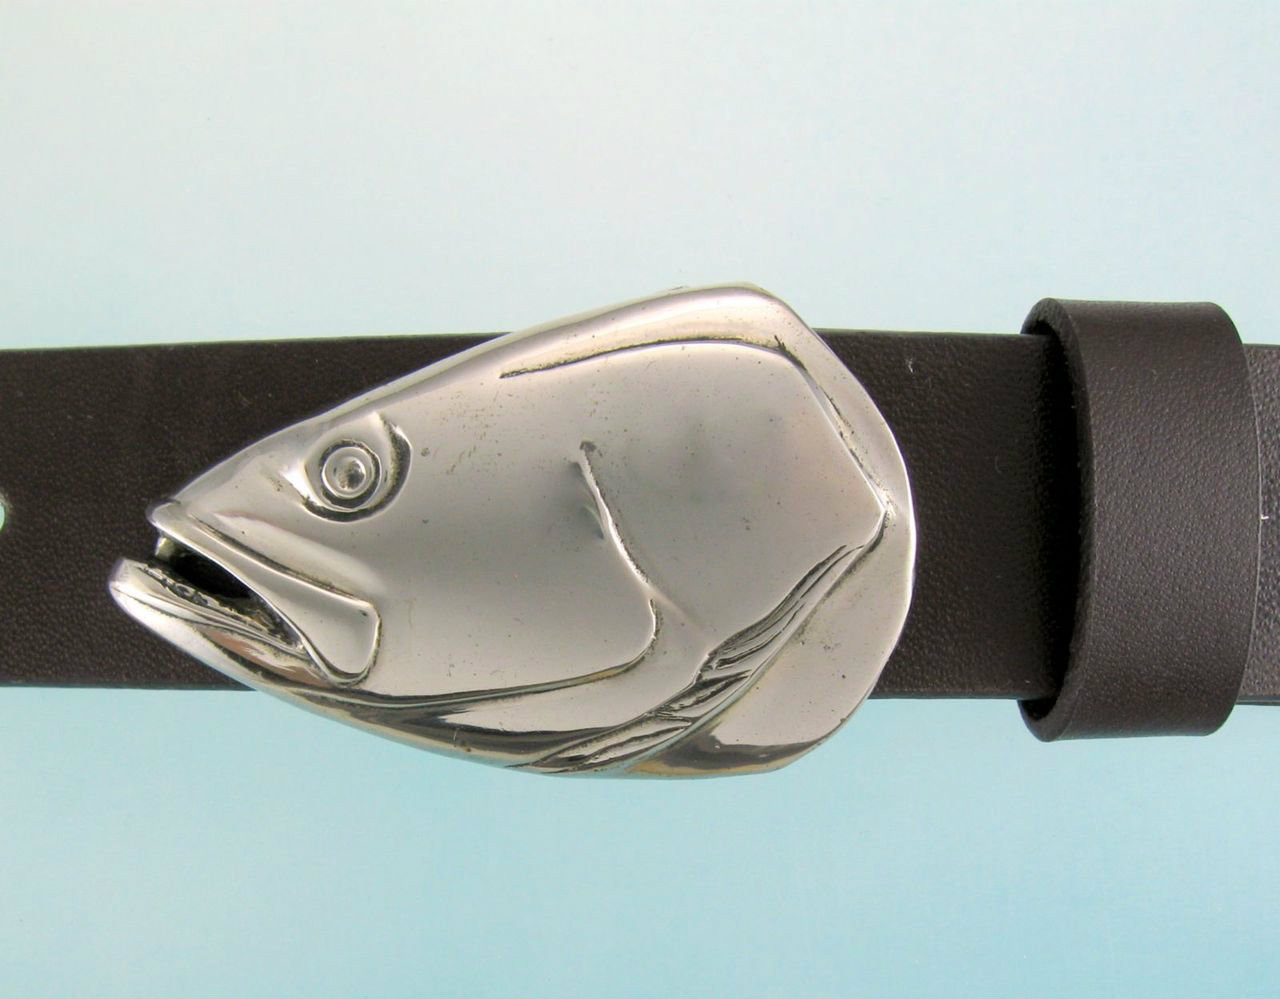 Seatrout Fish 1.25 Belt Buckle in White Bronze - Jewelry Art Studio